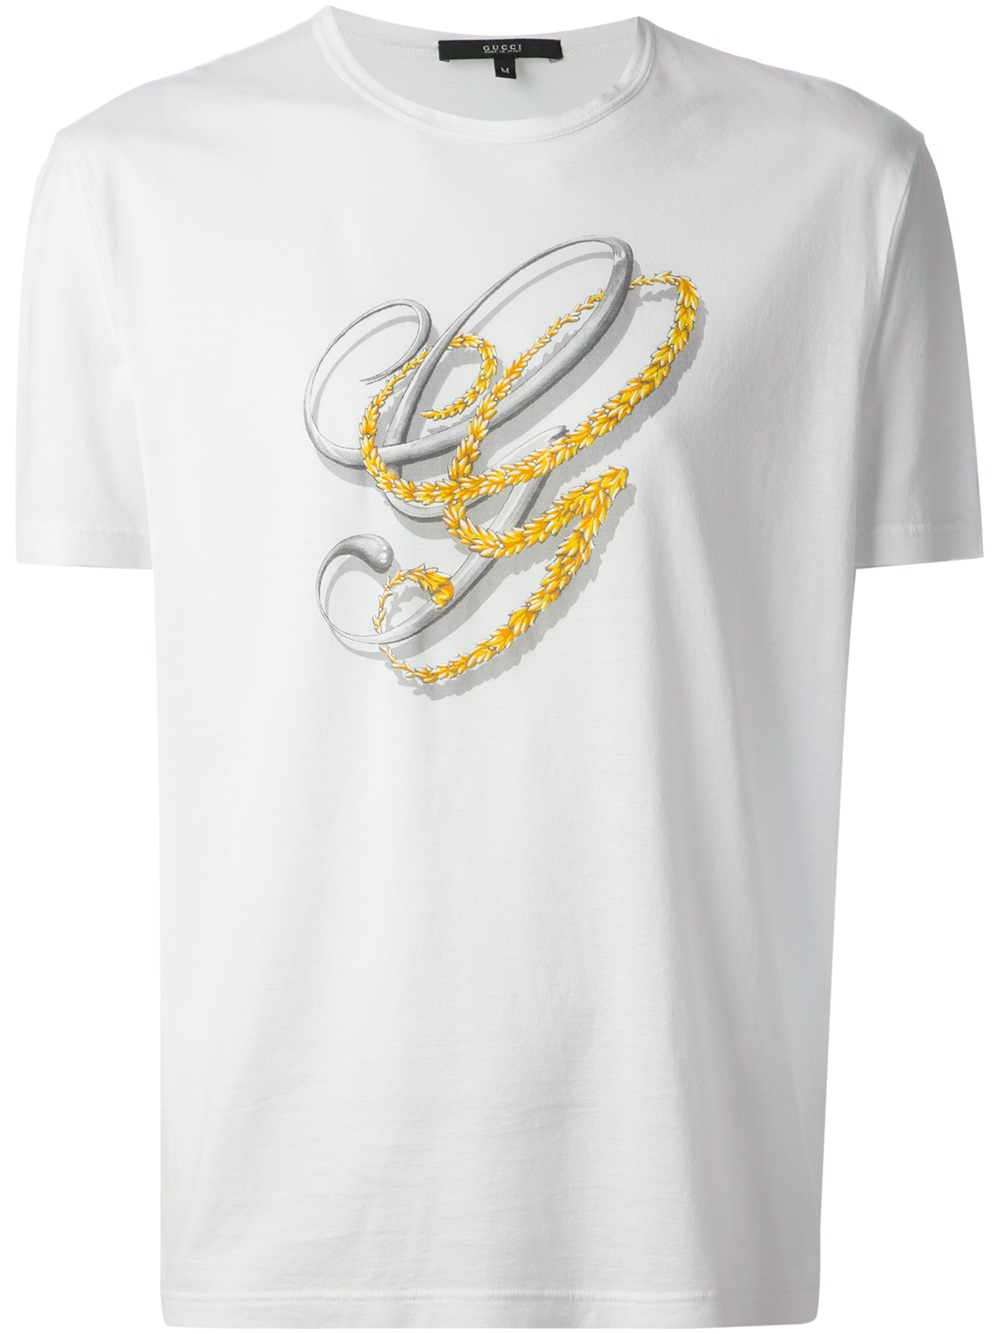 Lyst - Gucci Logo Print Tshirt in White for Men